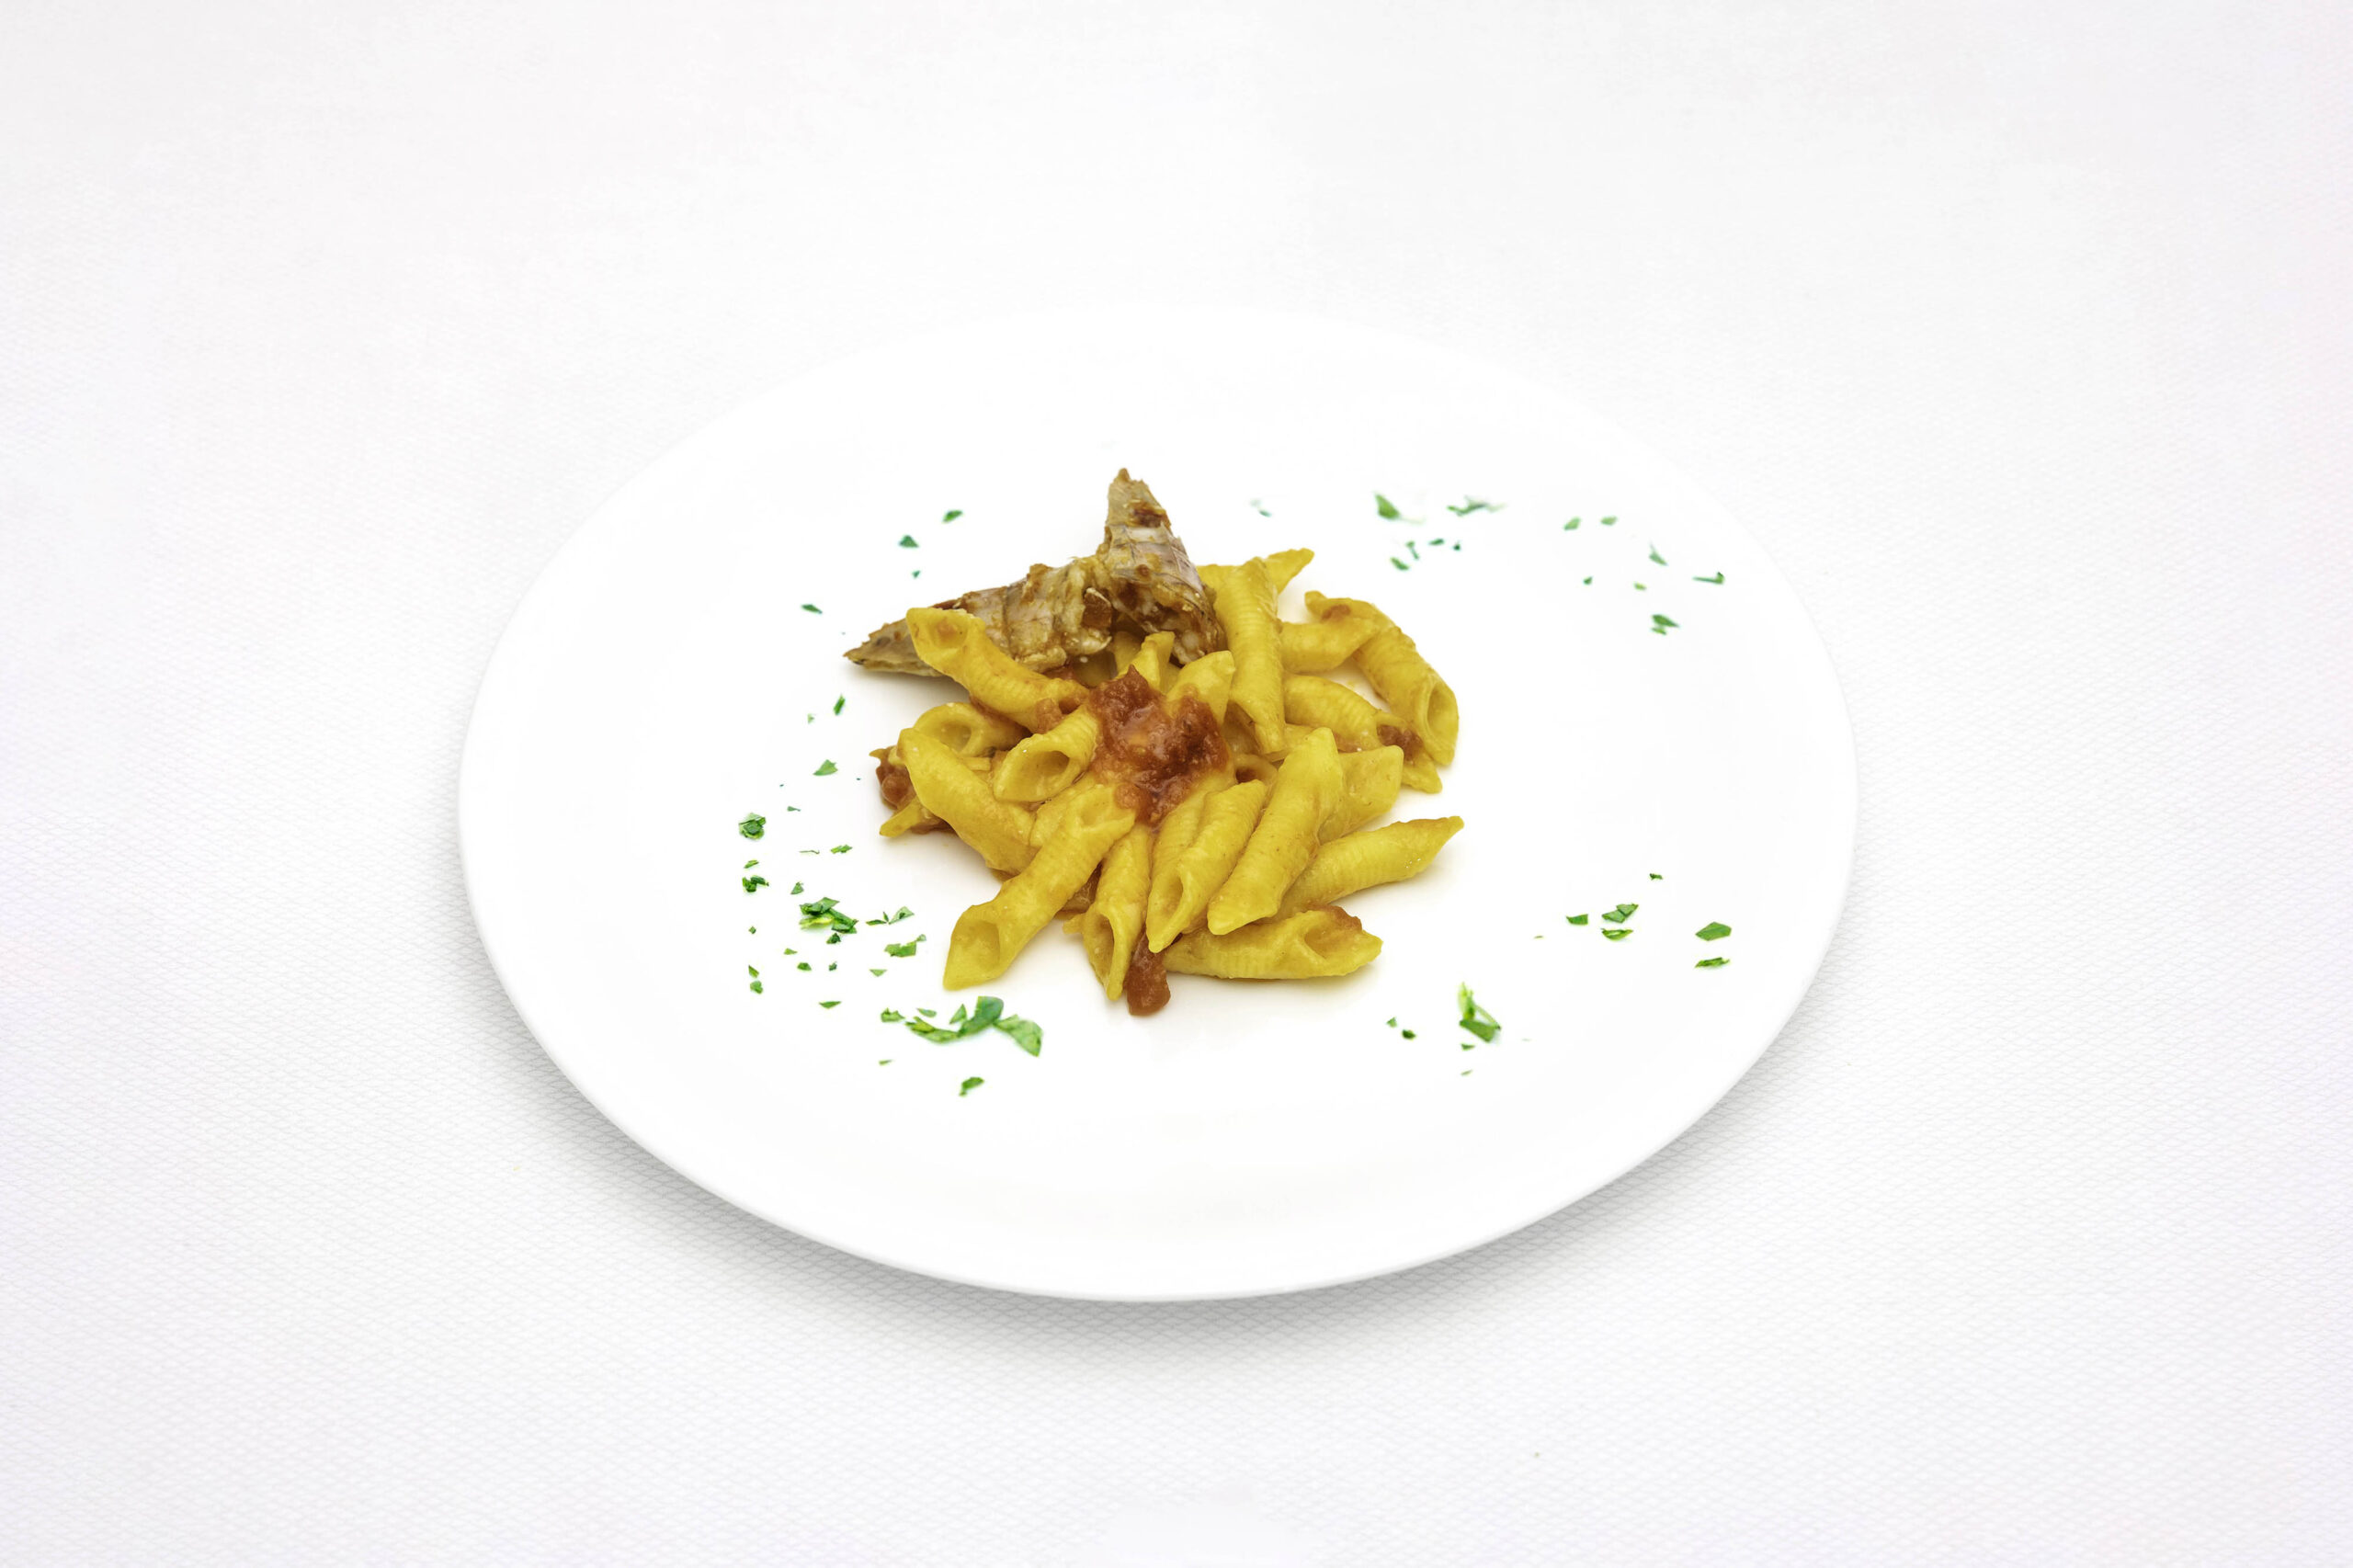 Pastifico-La-Fenice-pastificio-Cesenatico-pasta-fresca-pasta-surgelata-pasta-artigianale-Emilia-Romagna-garganelli-ragu-di-canocchie